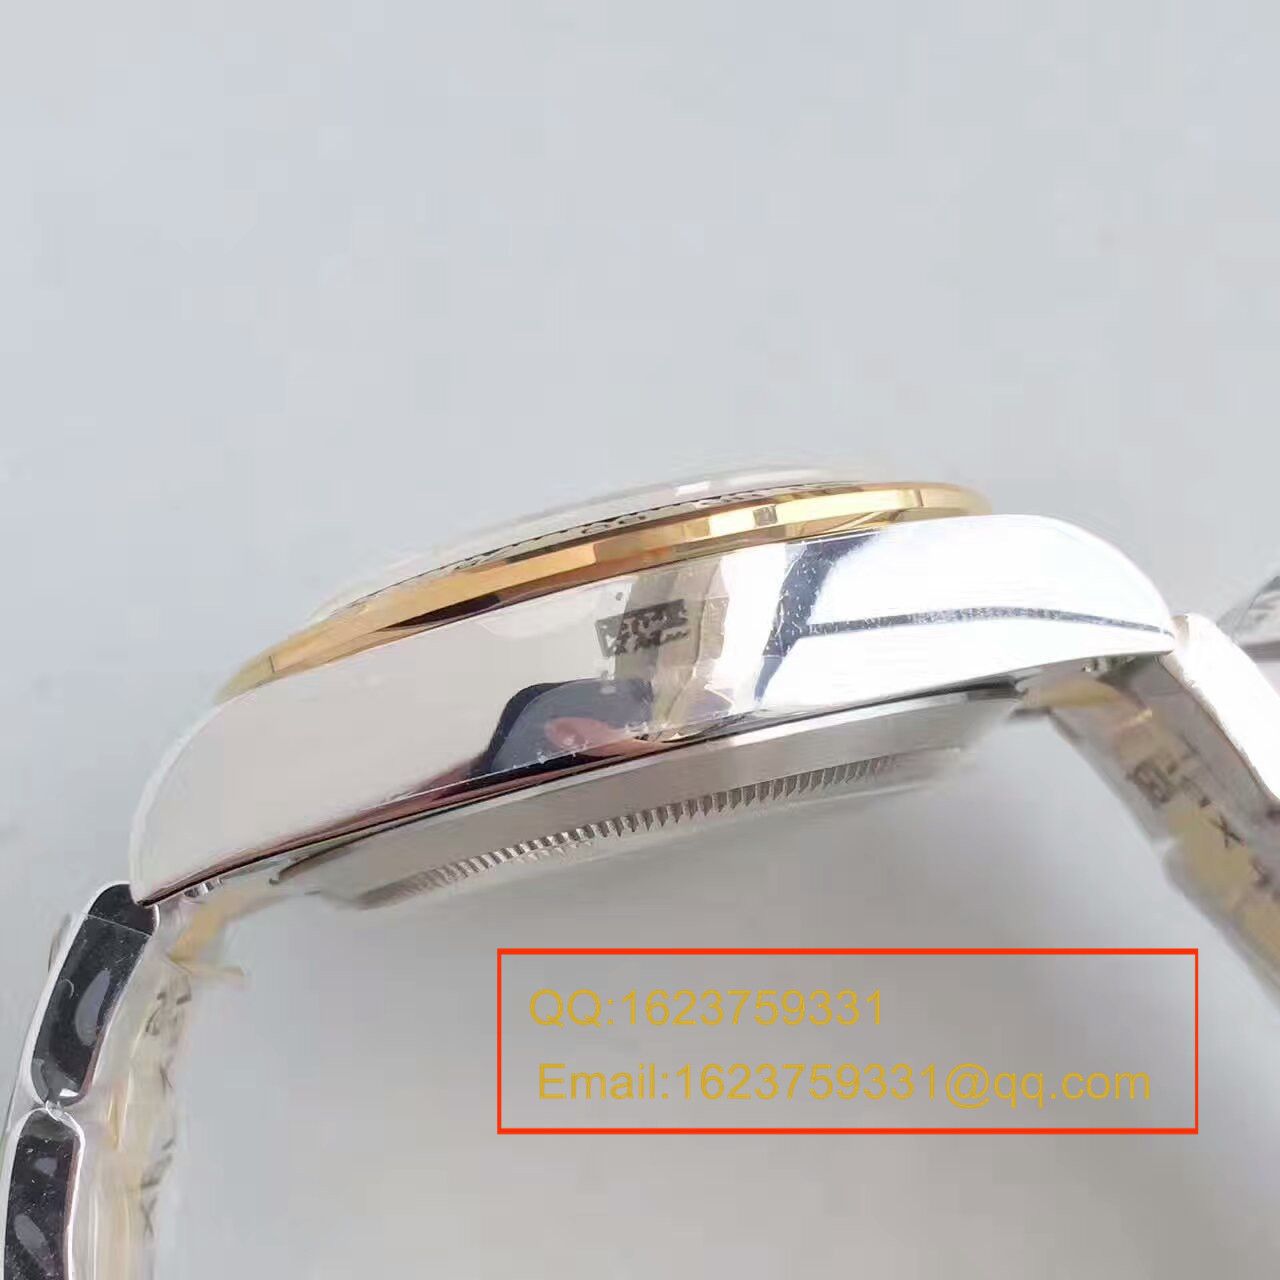 【JF厂1:1复刻手表】劳力士宇宙计型迪通拿系列116508金盘腕表 / R129